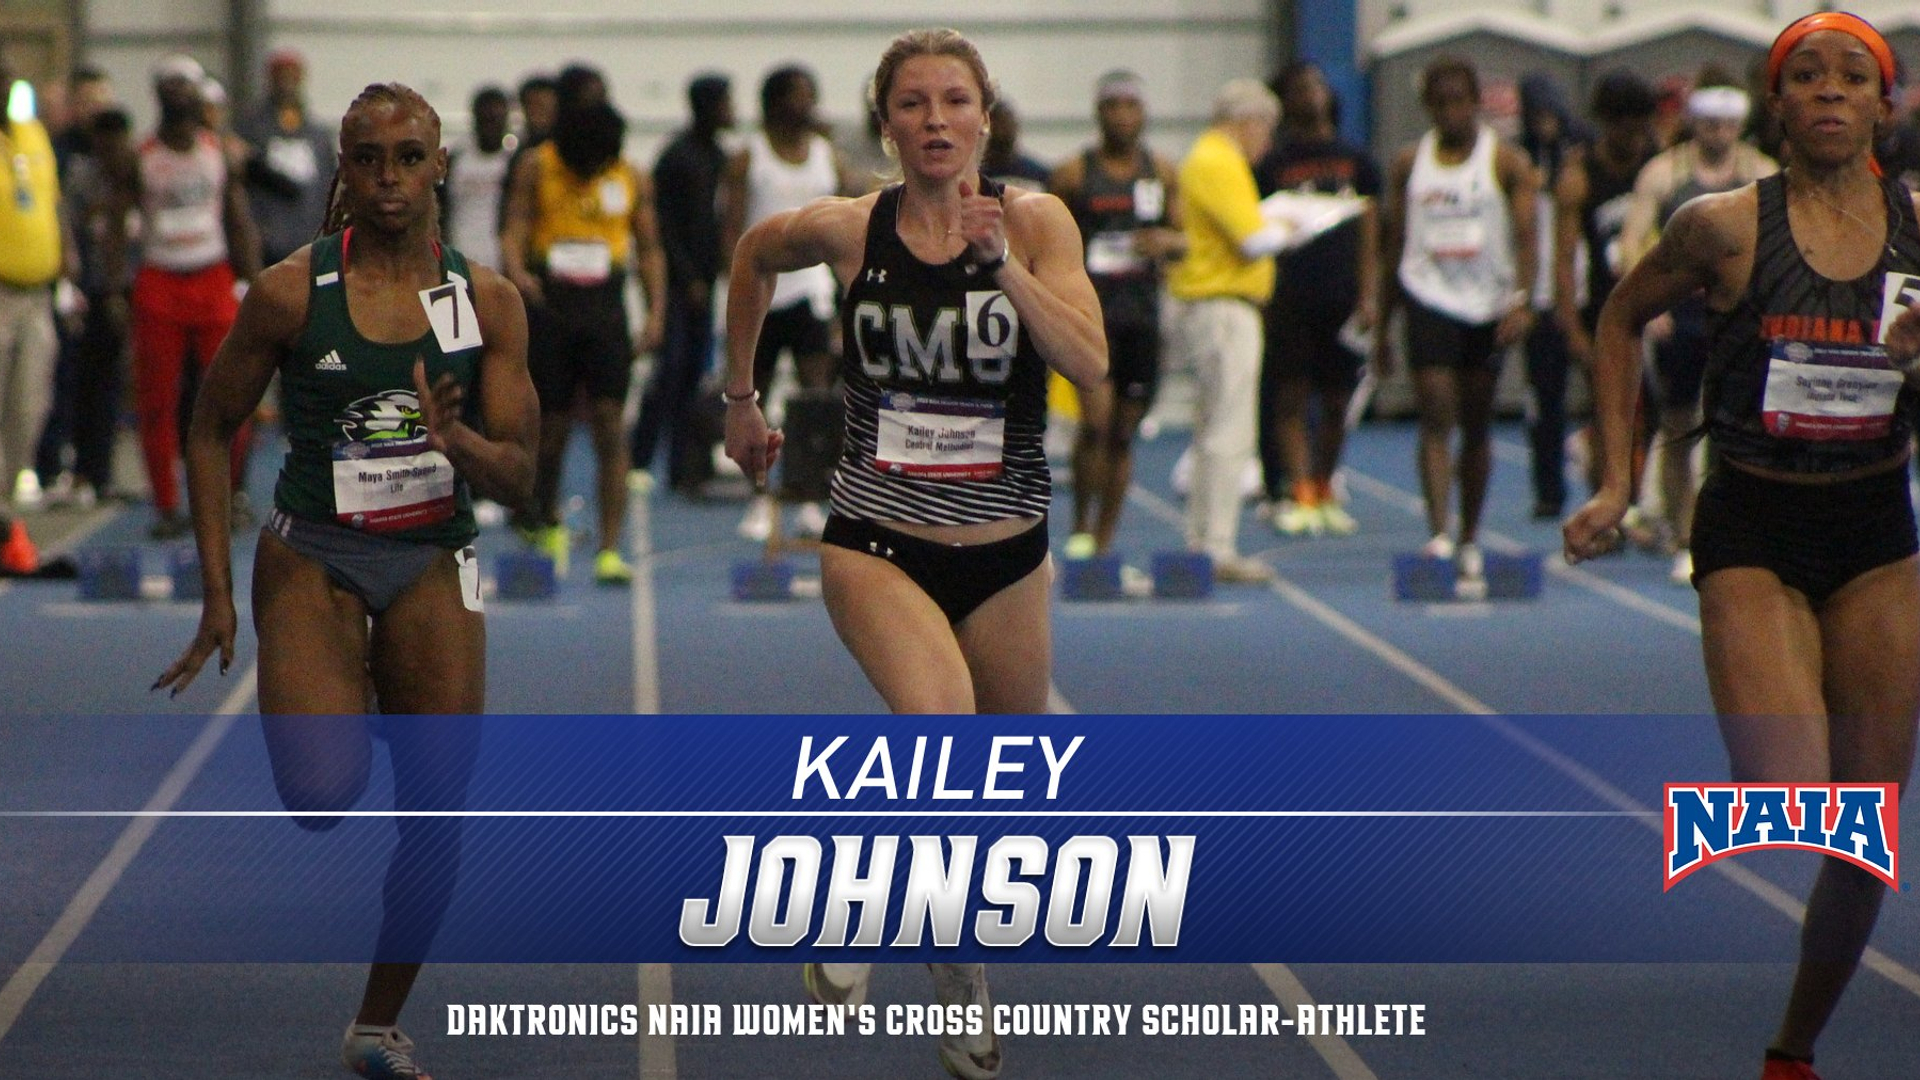 Kailey Johnson Named Daktronics NAIA Scholar-Athlete